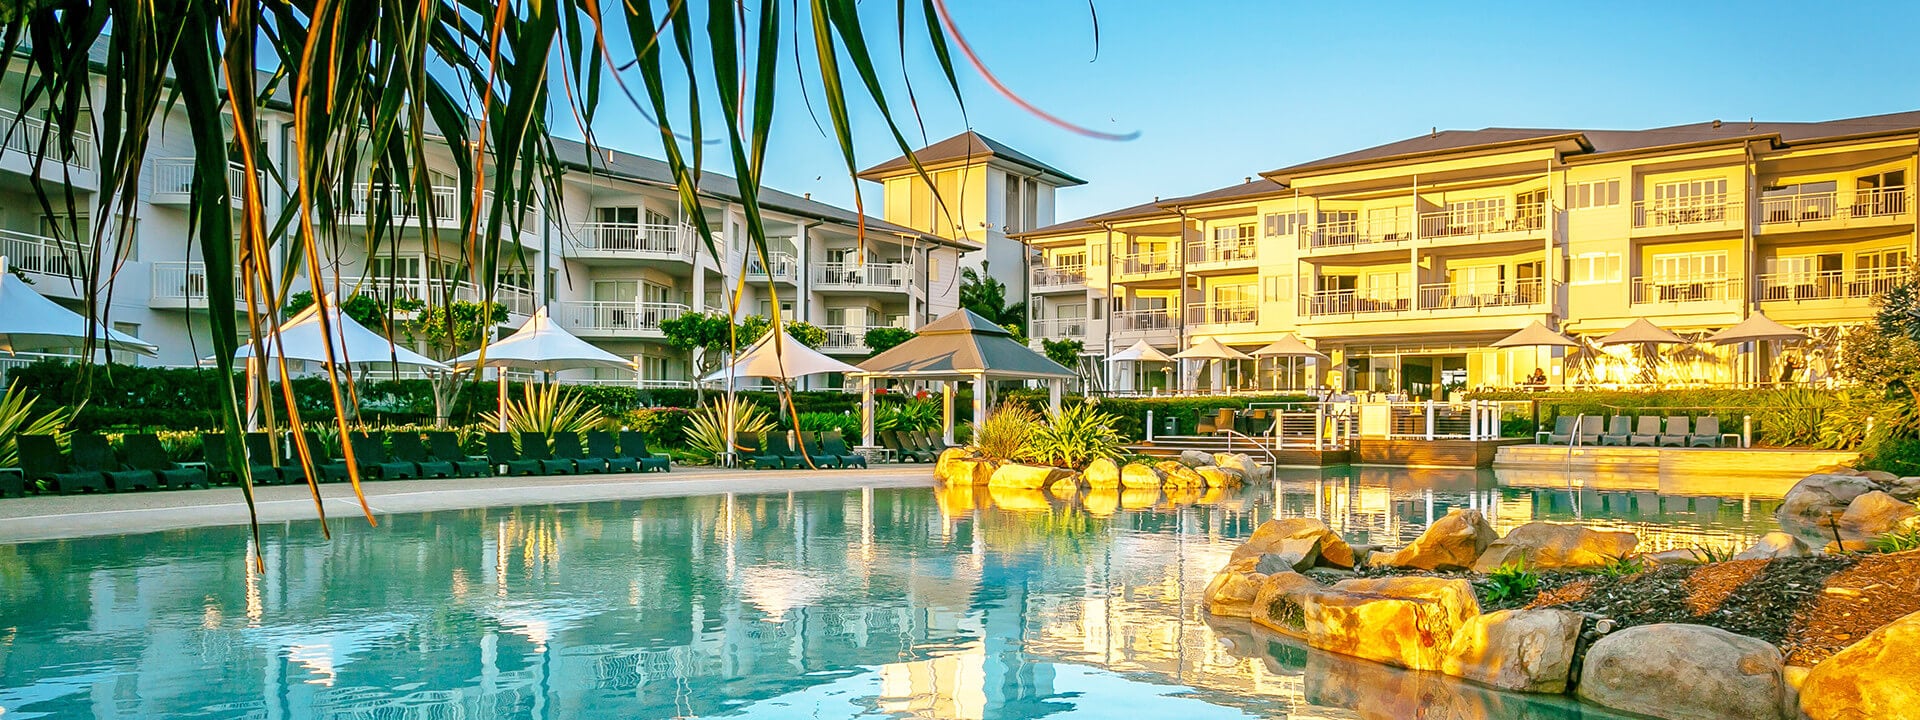 Mantra Hotels Accommodation Melbourne Gold Coast Sydney - 